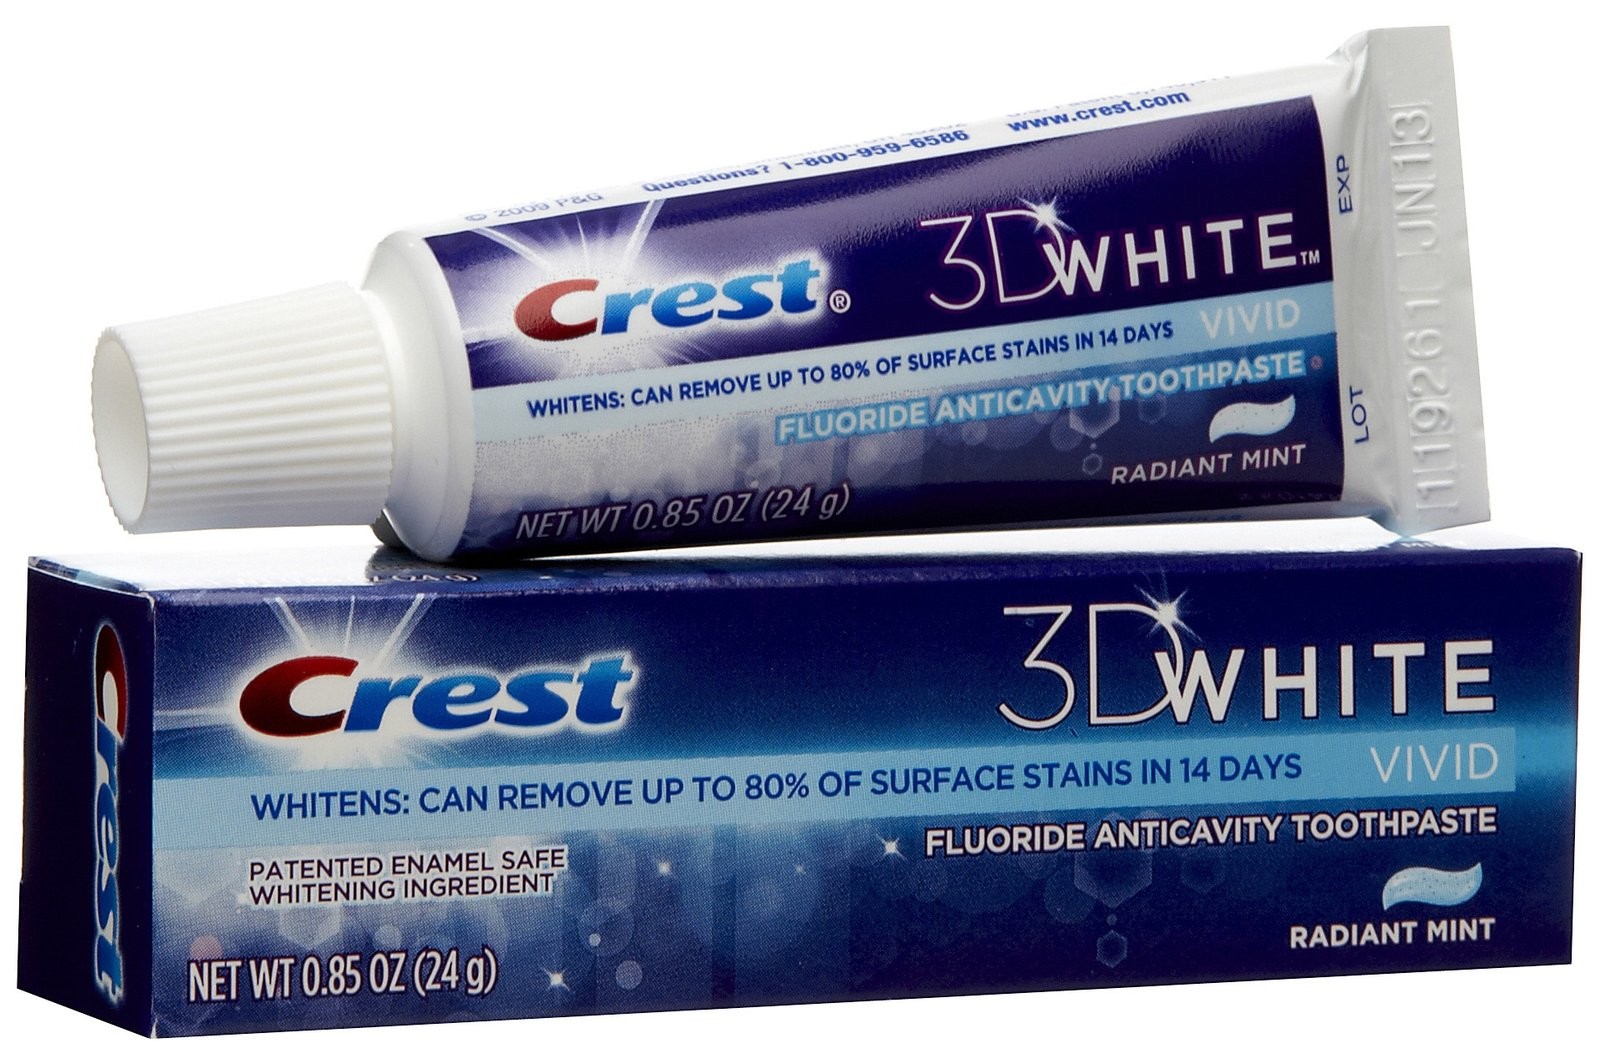 *HOT* Free Crest Toothpaste + $1.00 Moneymaker at Walgreens